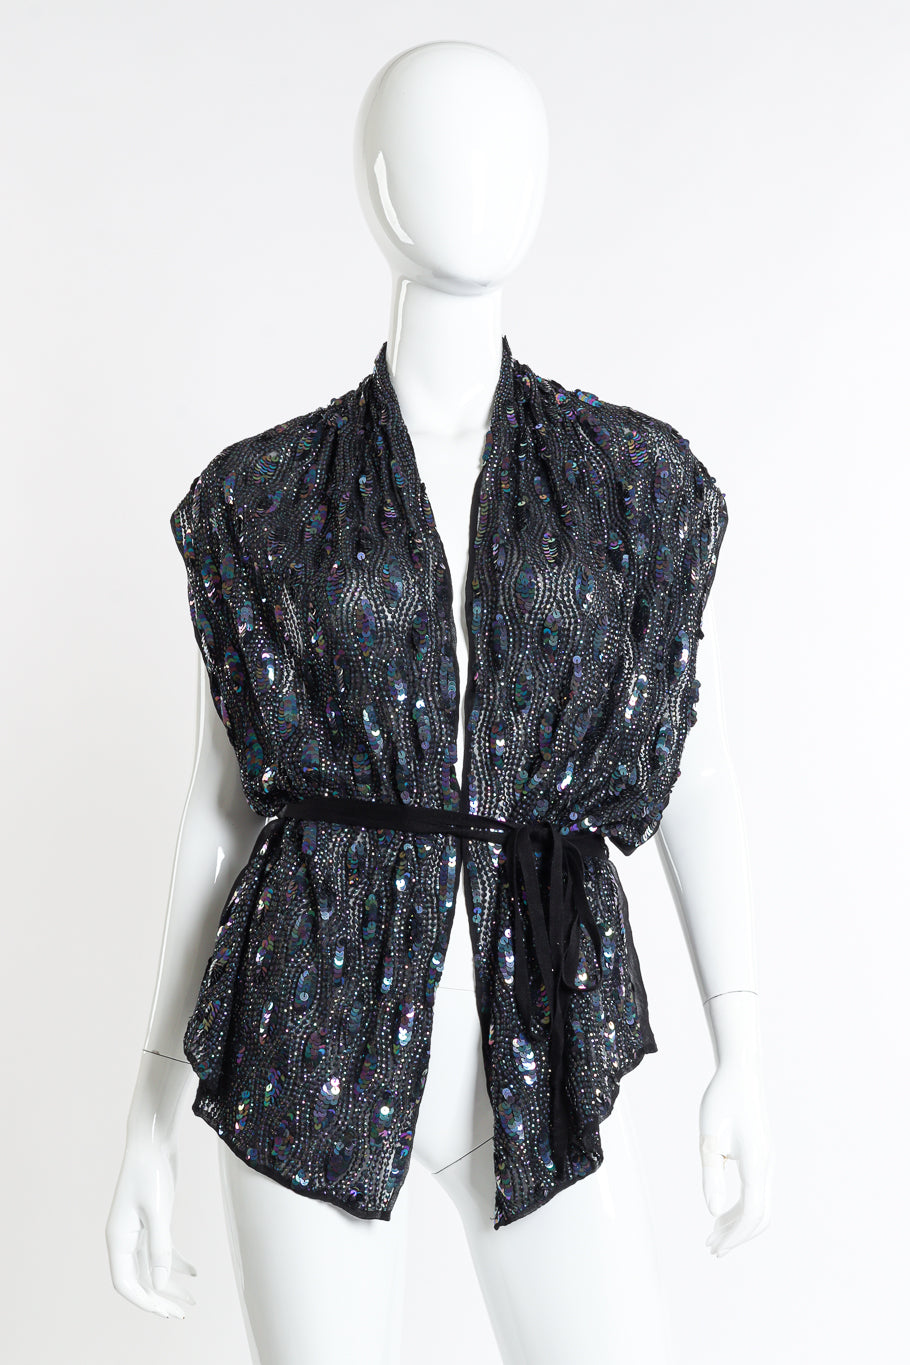 Ann Demeulemeester Silk Sequin Vest Top front on mannequin @recessla